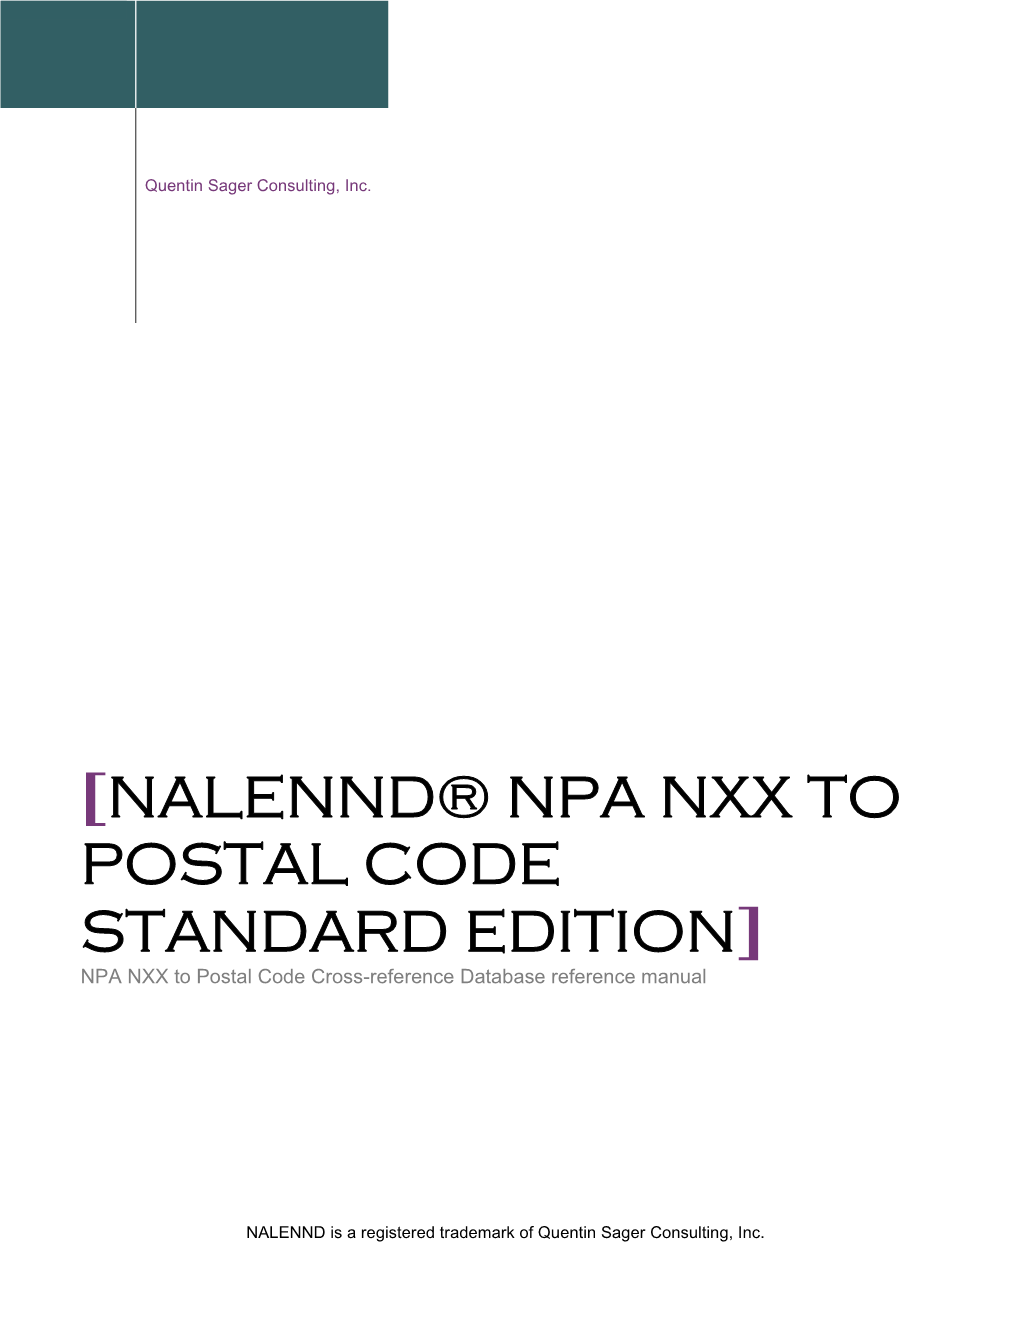 NALENND® NPA NXX to POSTAL CODE STANDARD EDITION] NPA NXX to Postal Code Cross-Reference Database Reference Manual